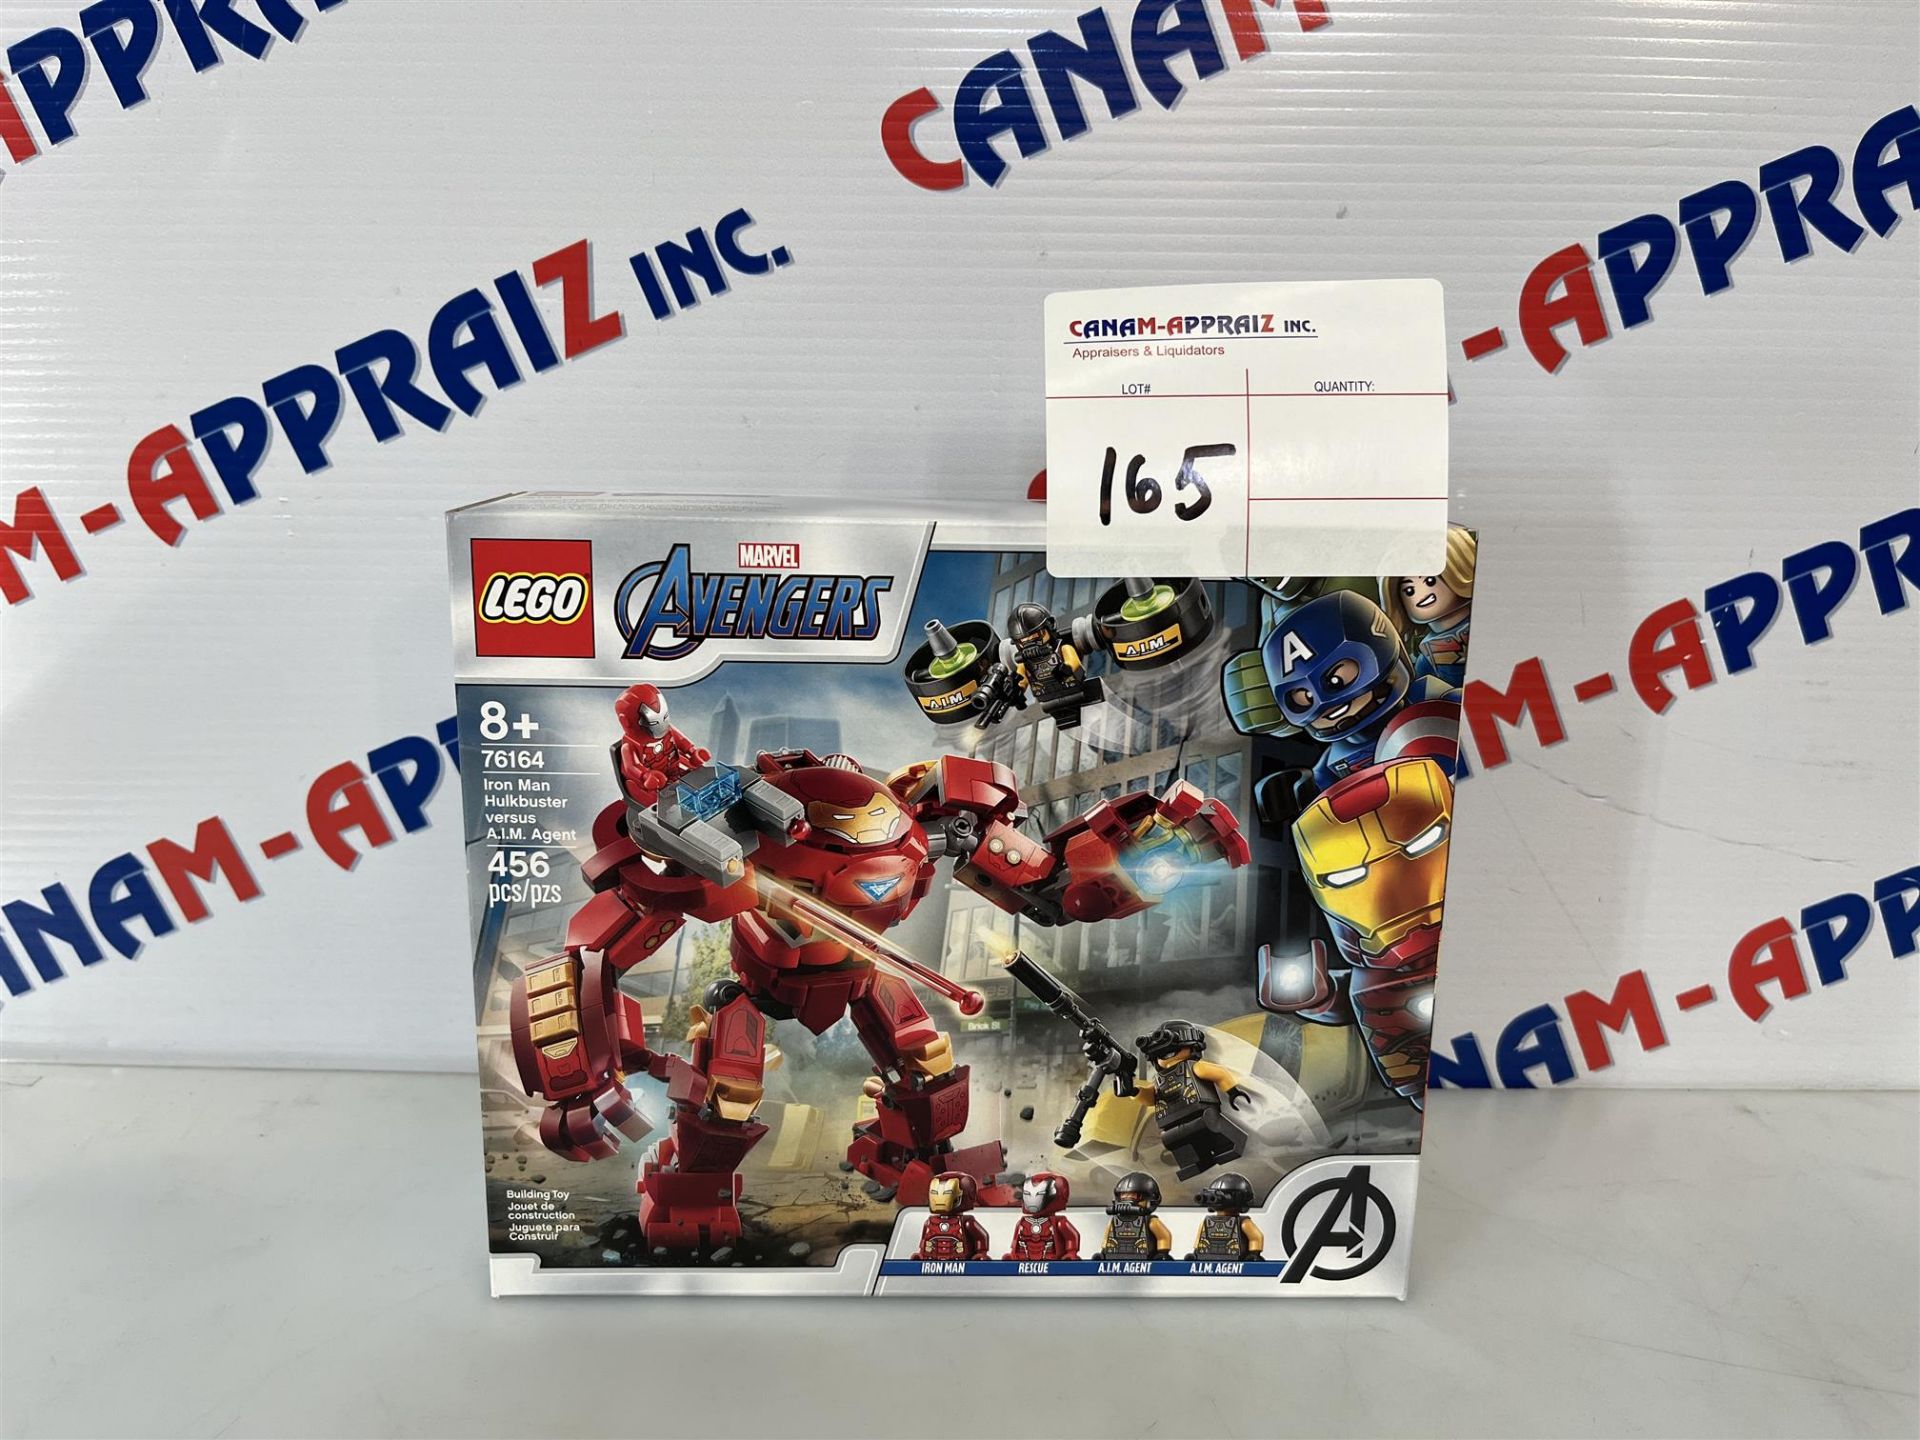 Lego AVENGERS Iron Man Hulkbuster Versus A.I.M. Agent 76164 - Ages 8+ - 564 PCS